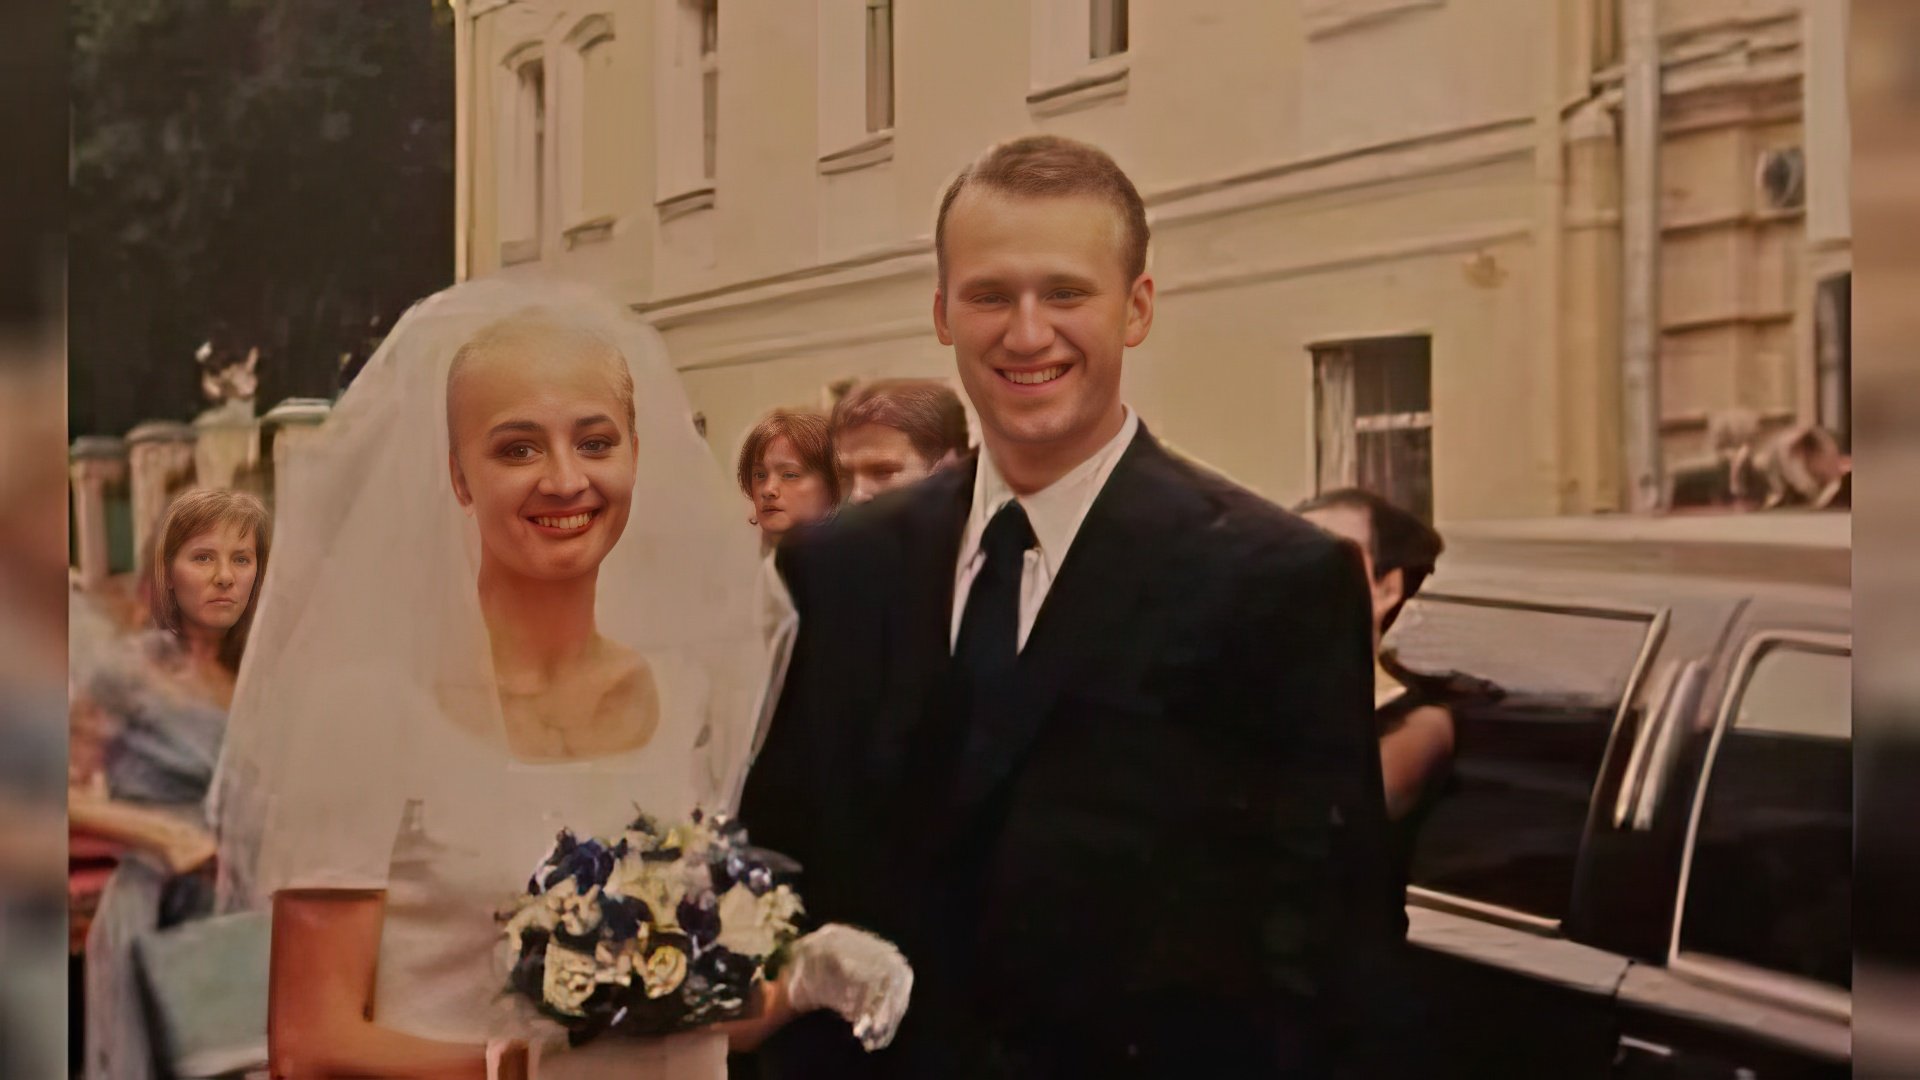 Wedding photo of Alexey and Yulia Navalny